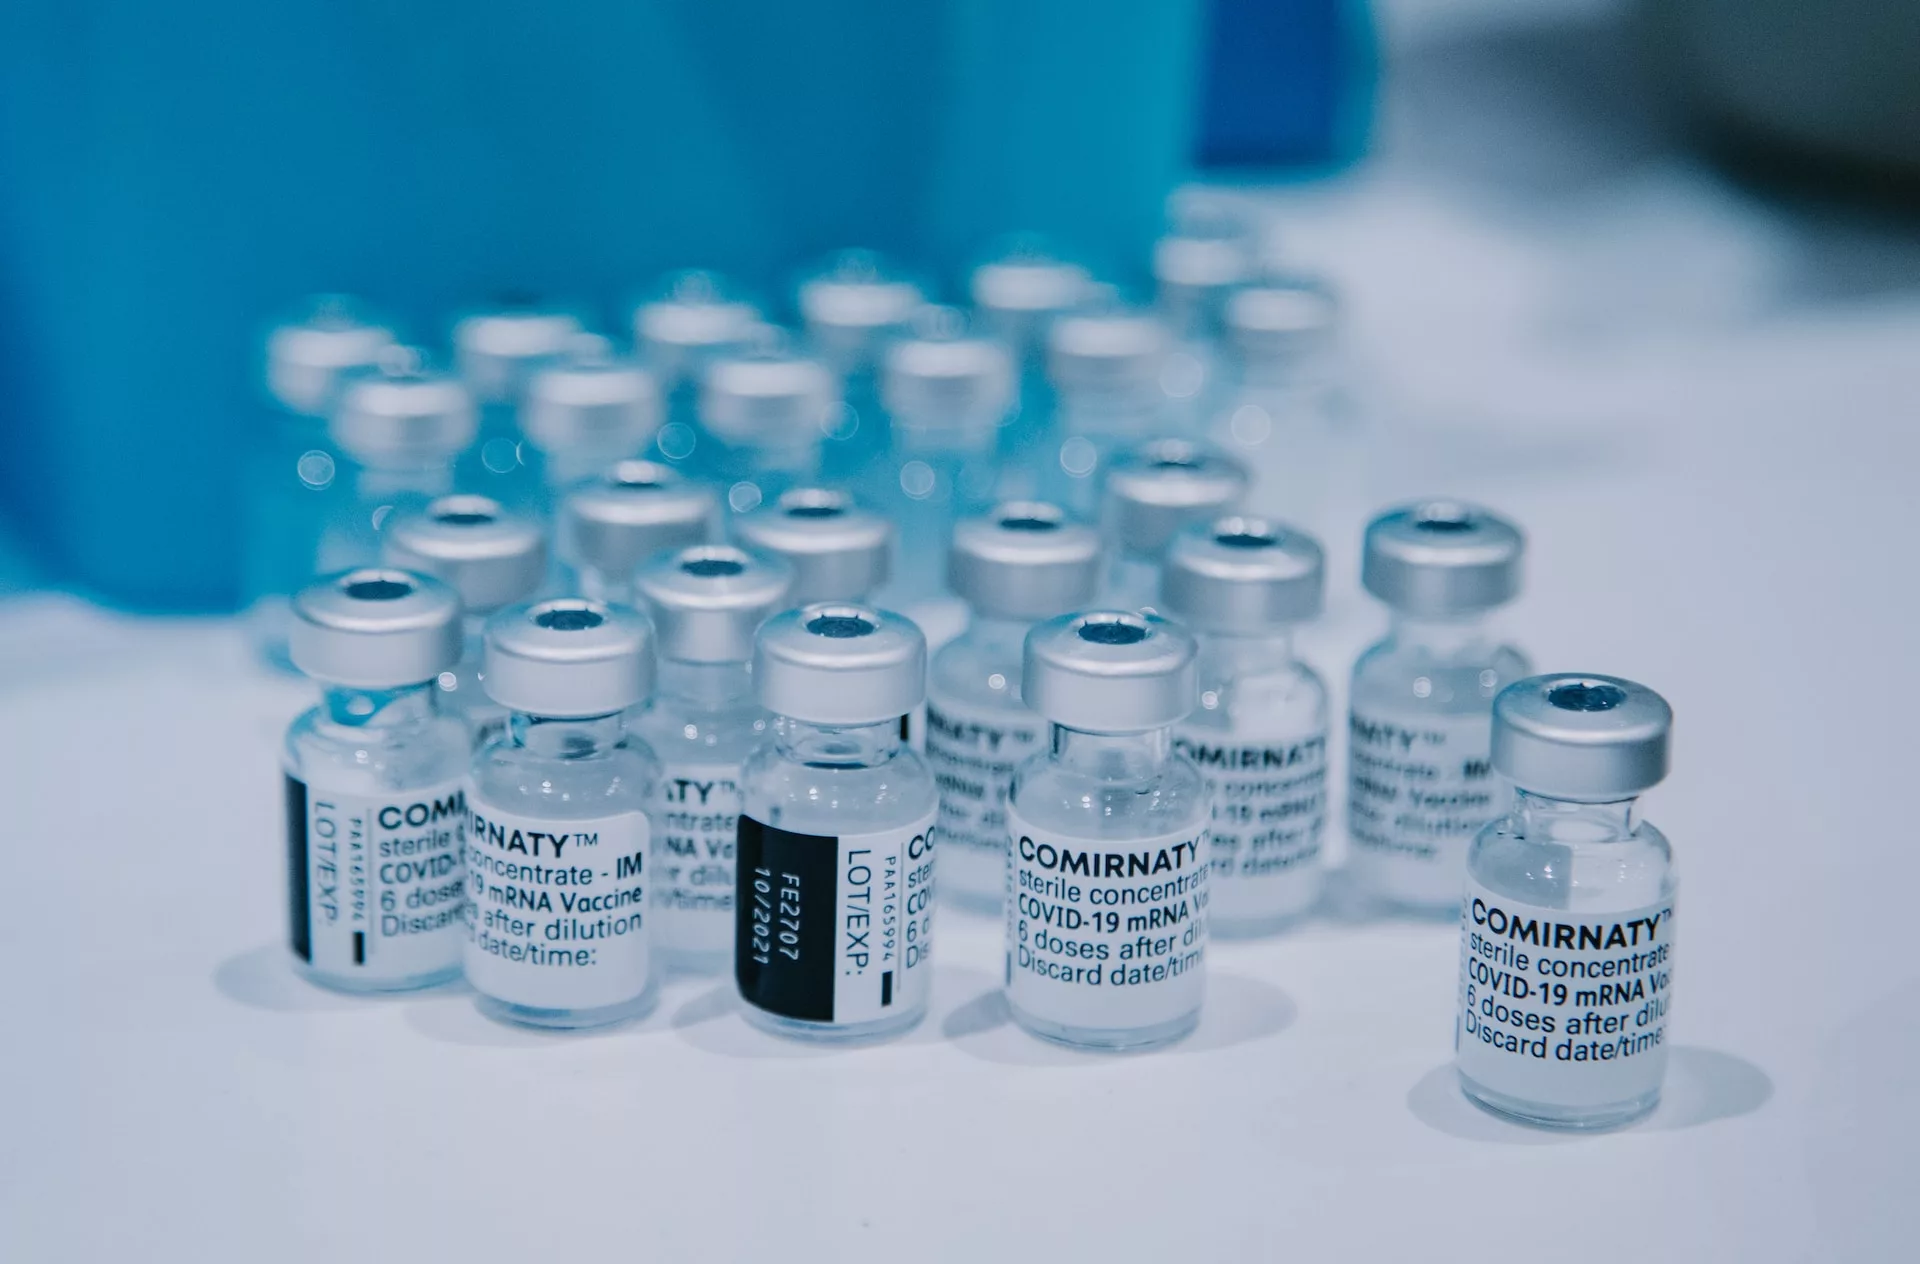 Small vials containing the Covid-19 mRNA vaccine.